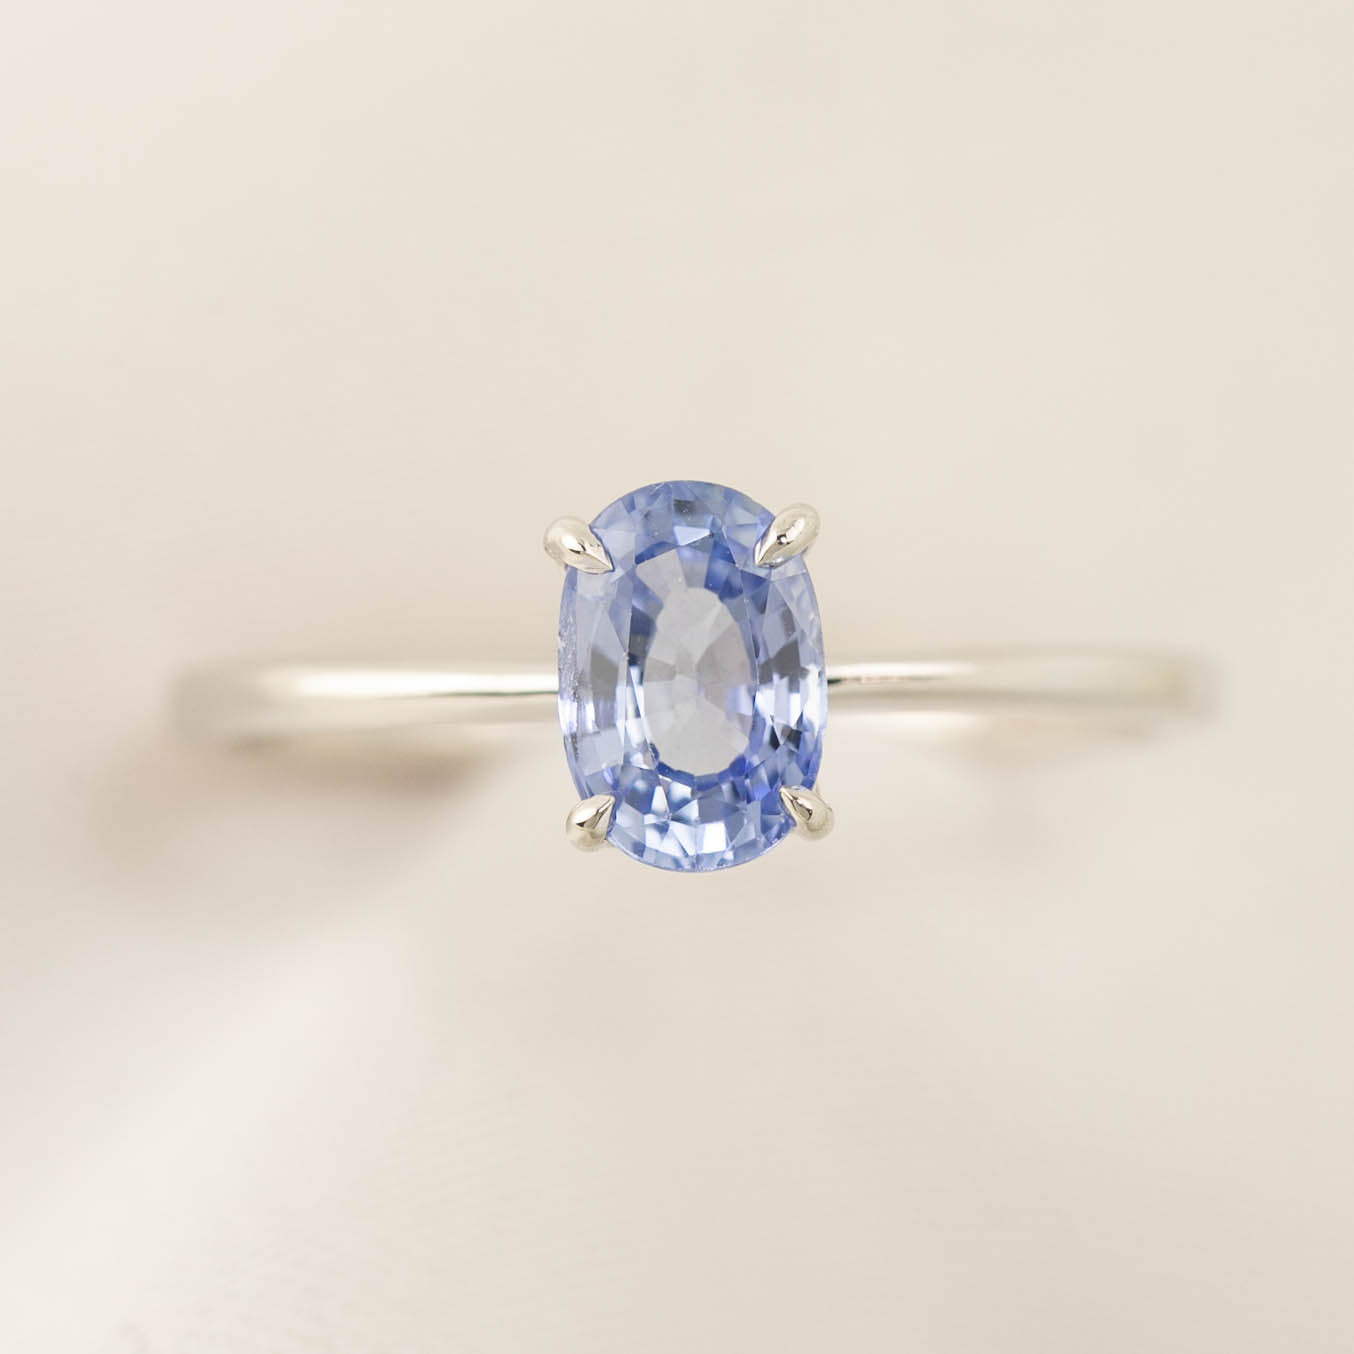 Stunning Light Blue Sapphire Engagement Ring